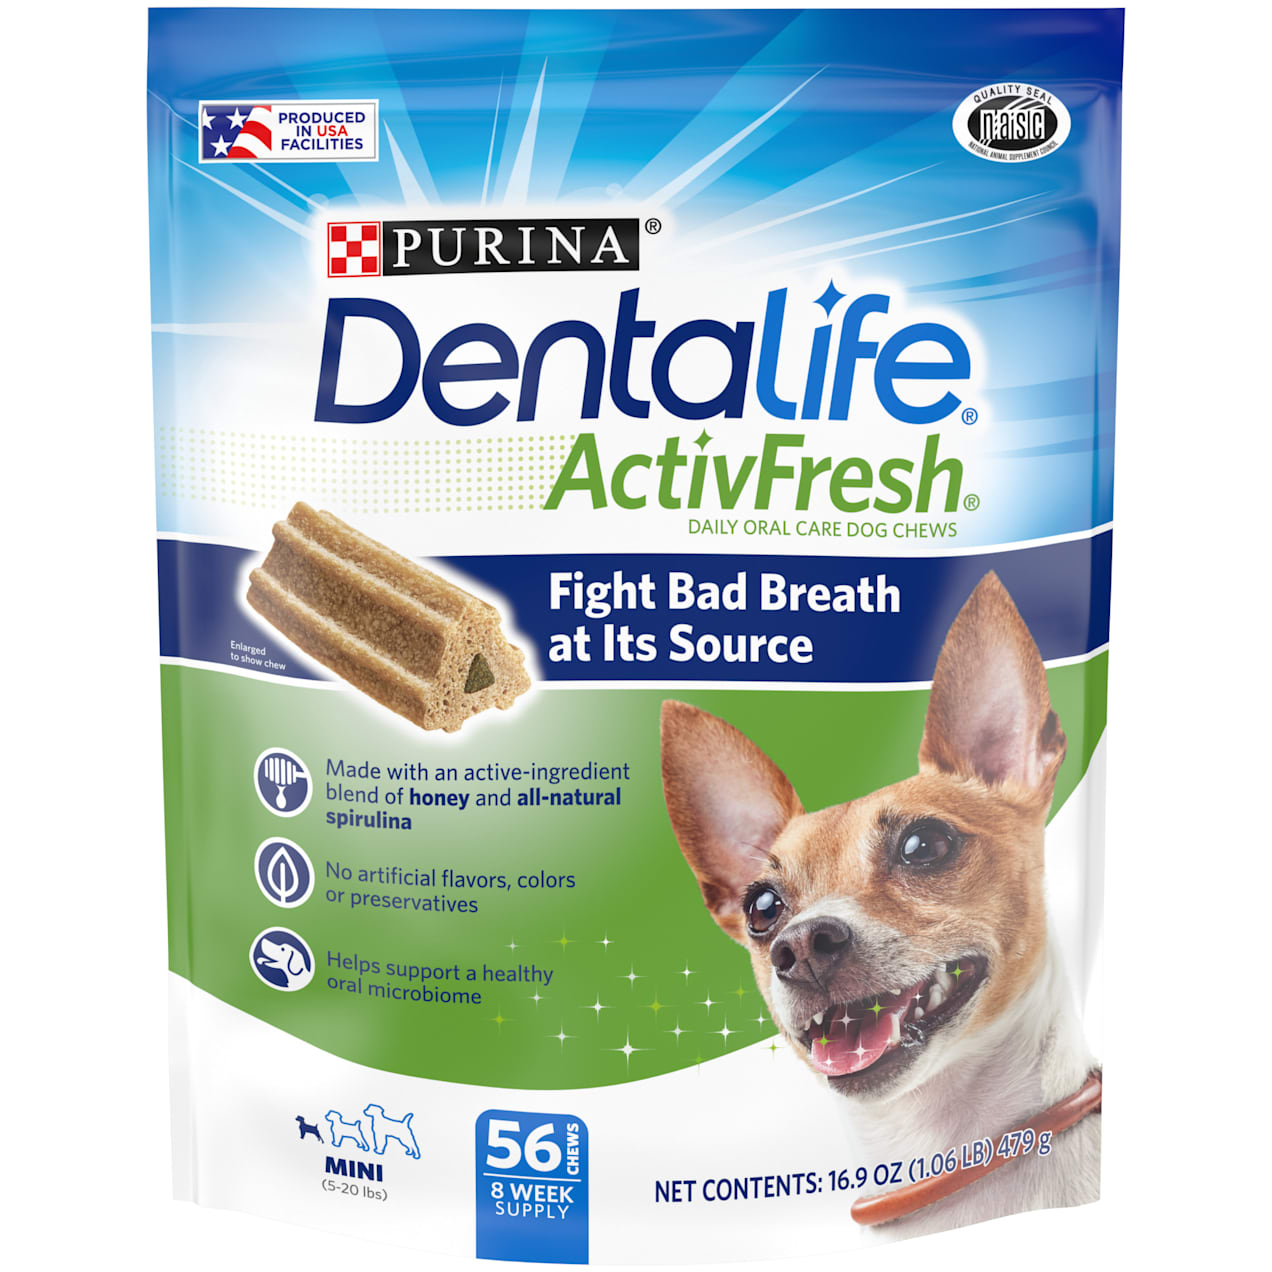 Purina DentalLife ActivFresh Daily Oral Care Mini Dog